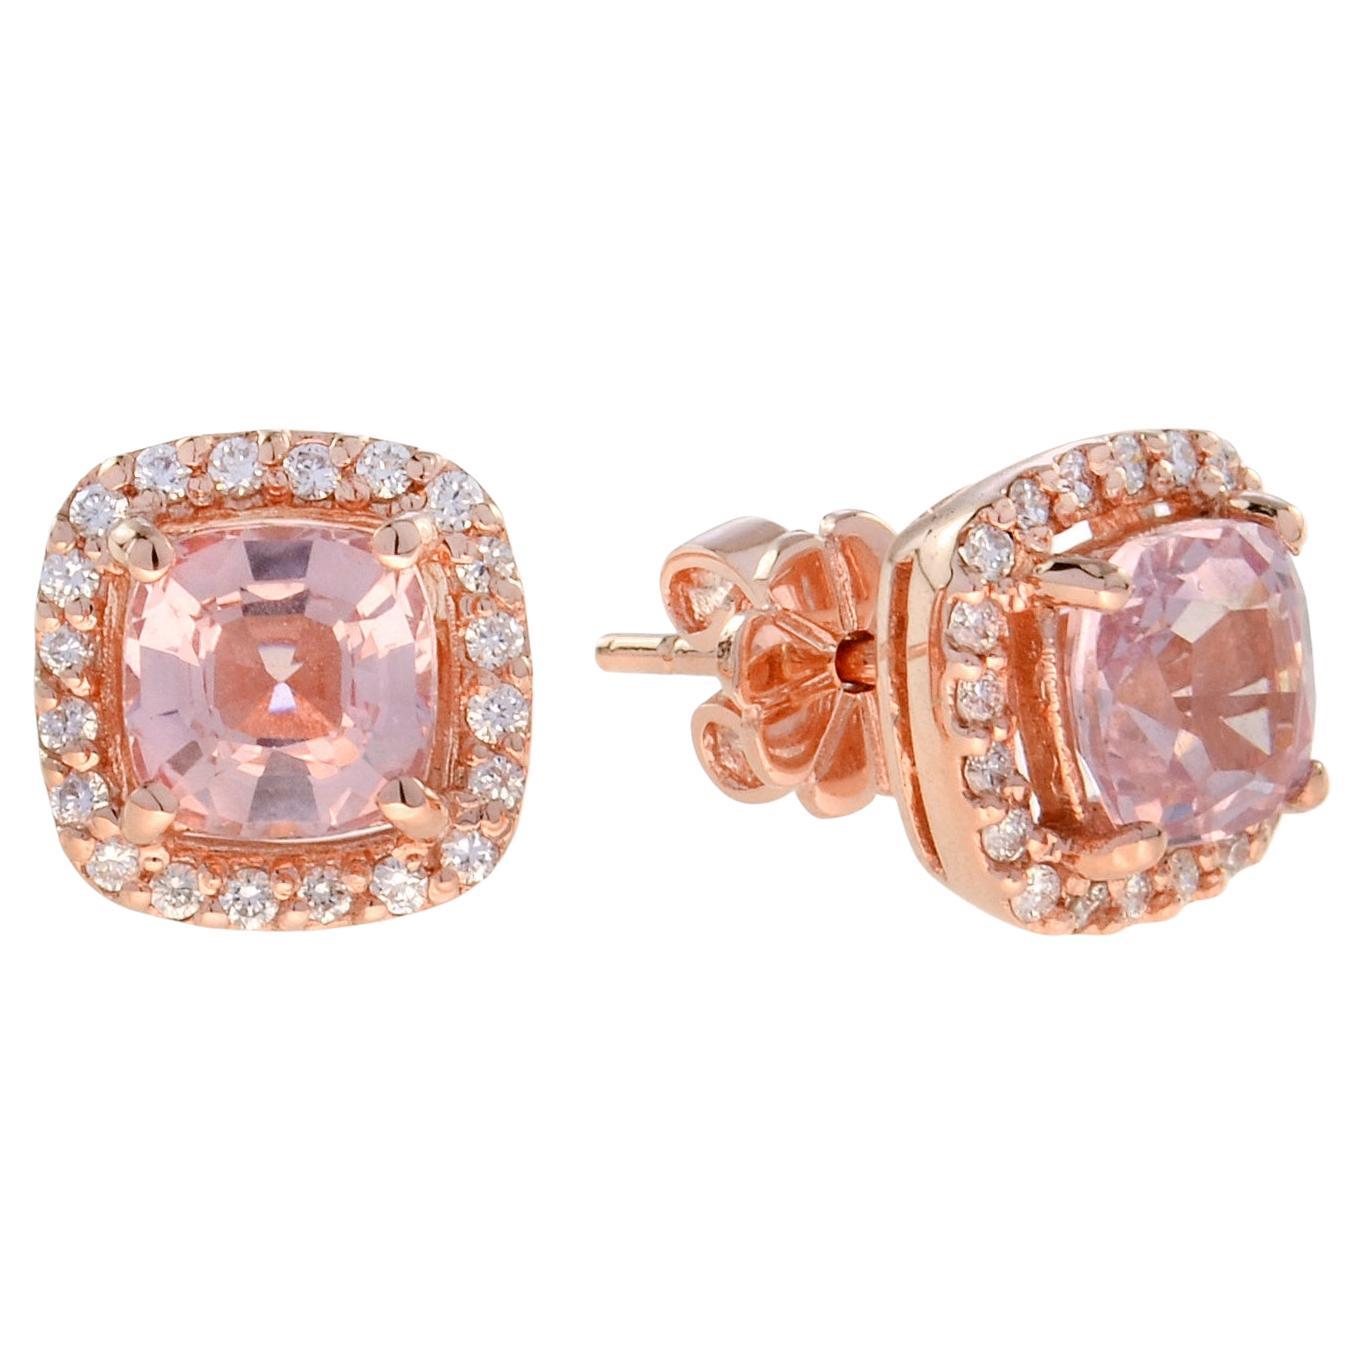 Halona Cushion Morganite and Diamond Stud Earrings in 14K Rose Gold